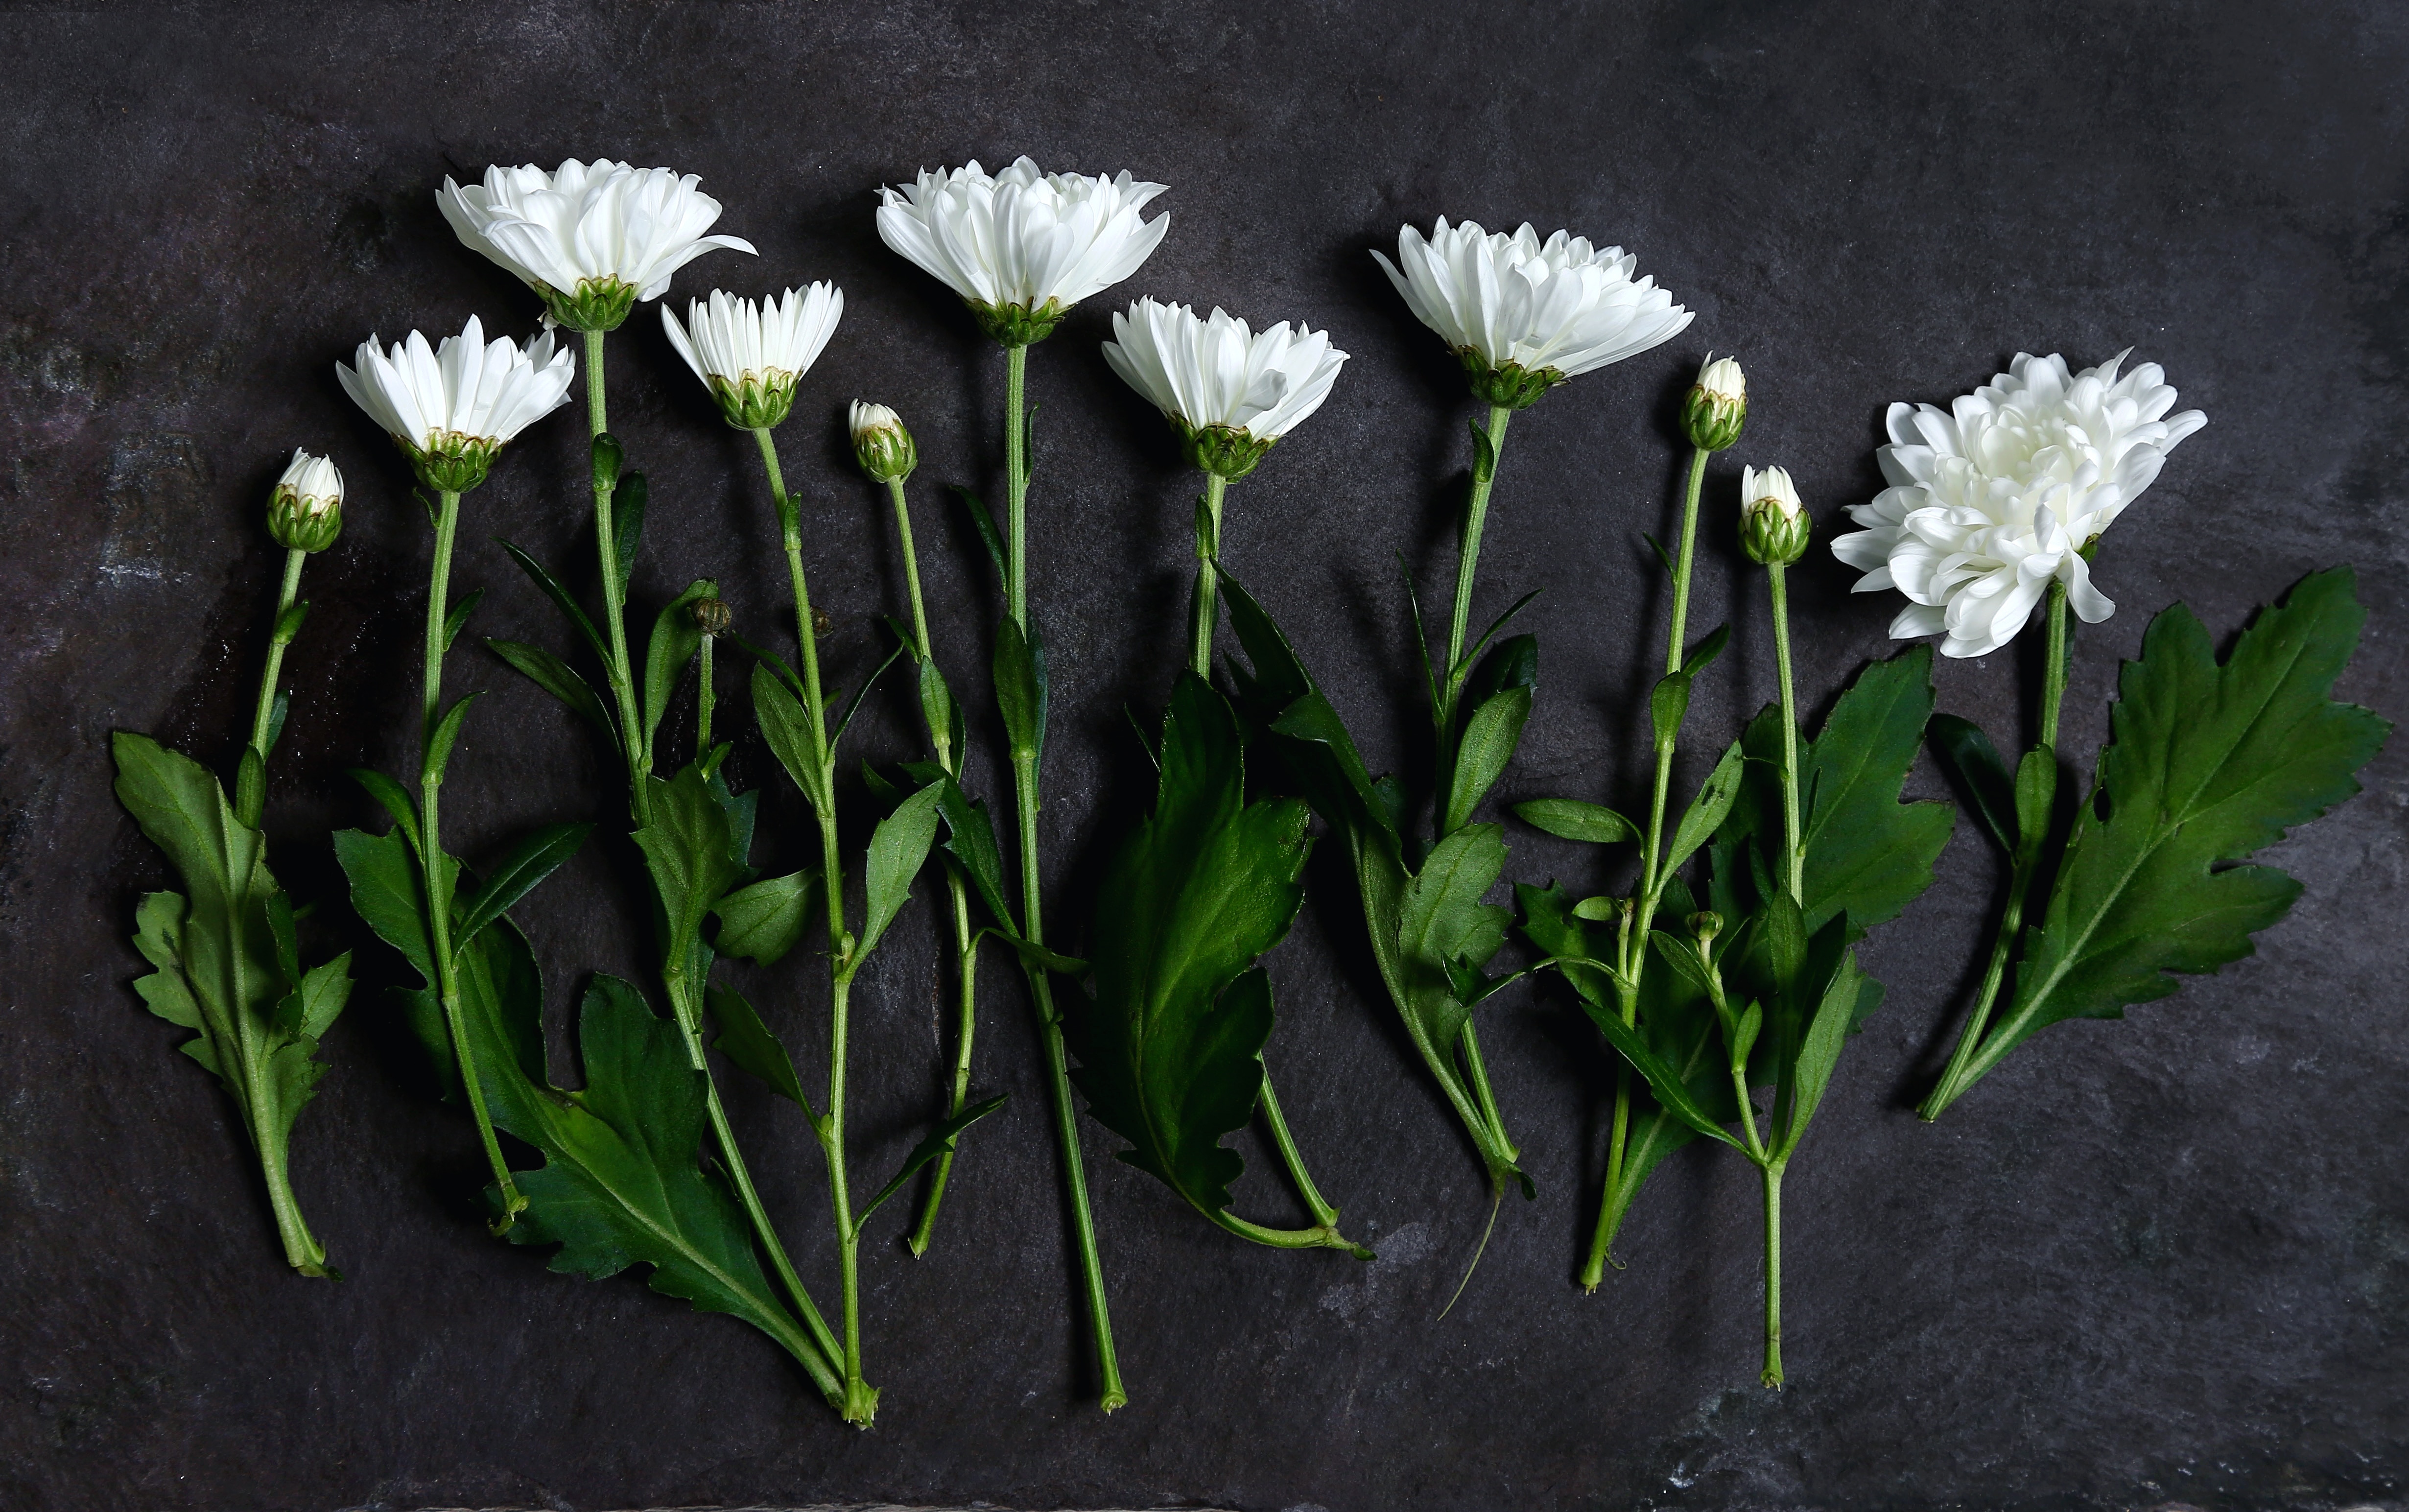 eleven white petaled flowers